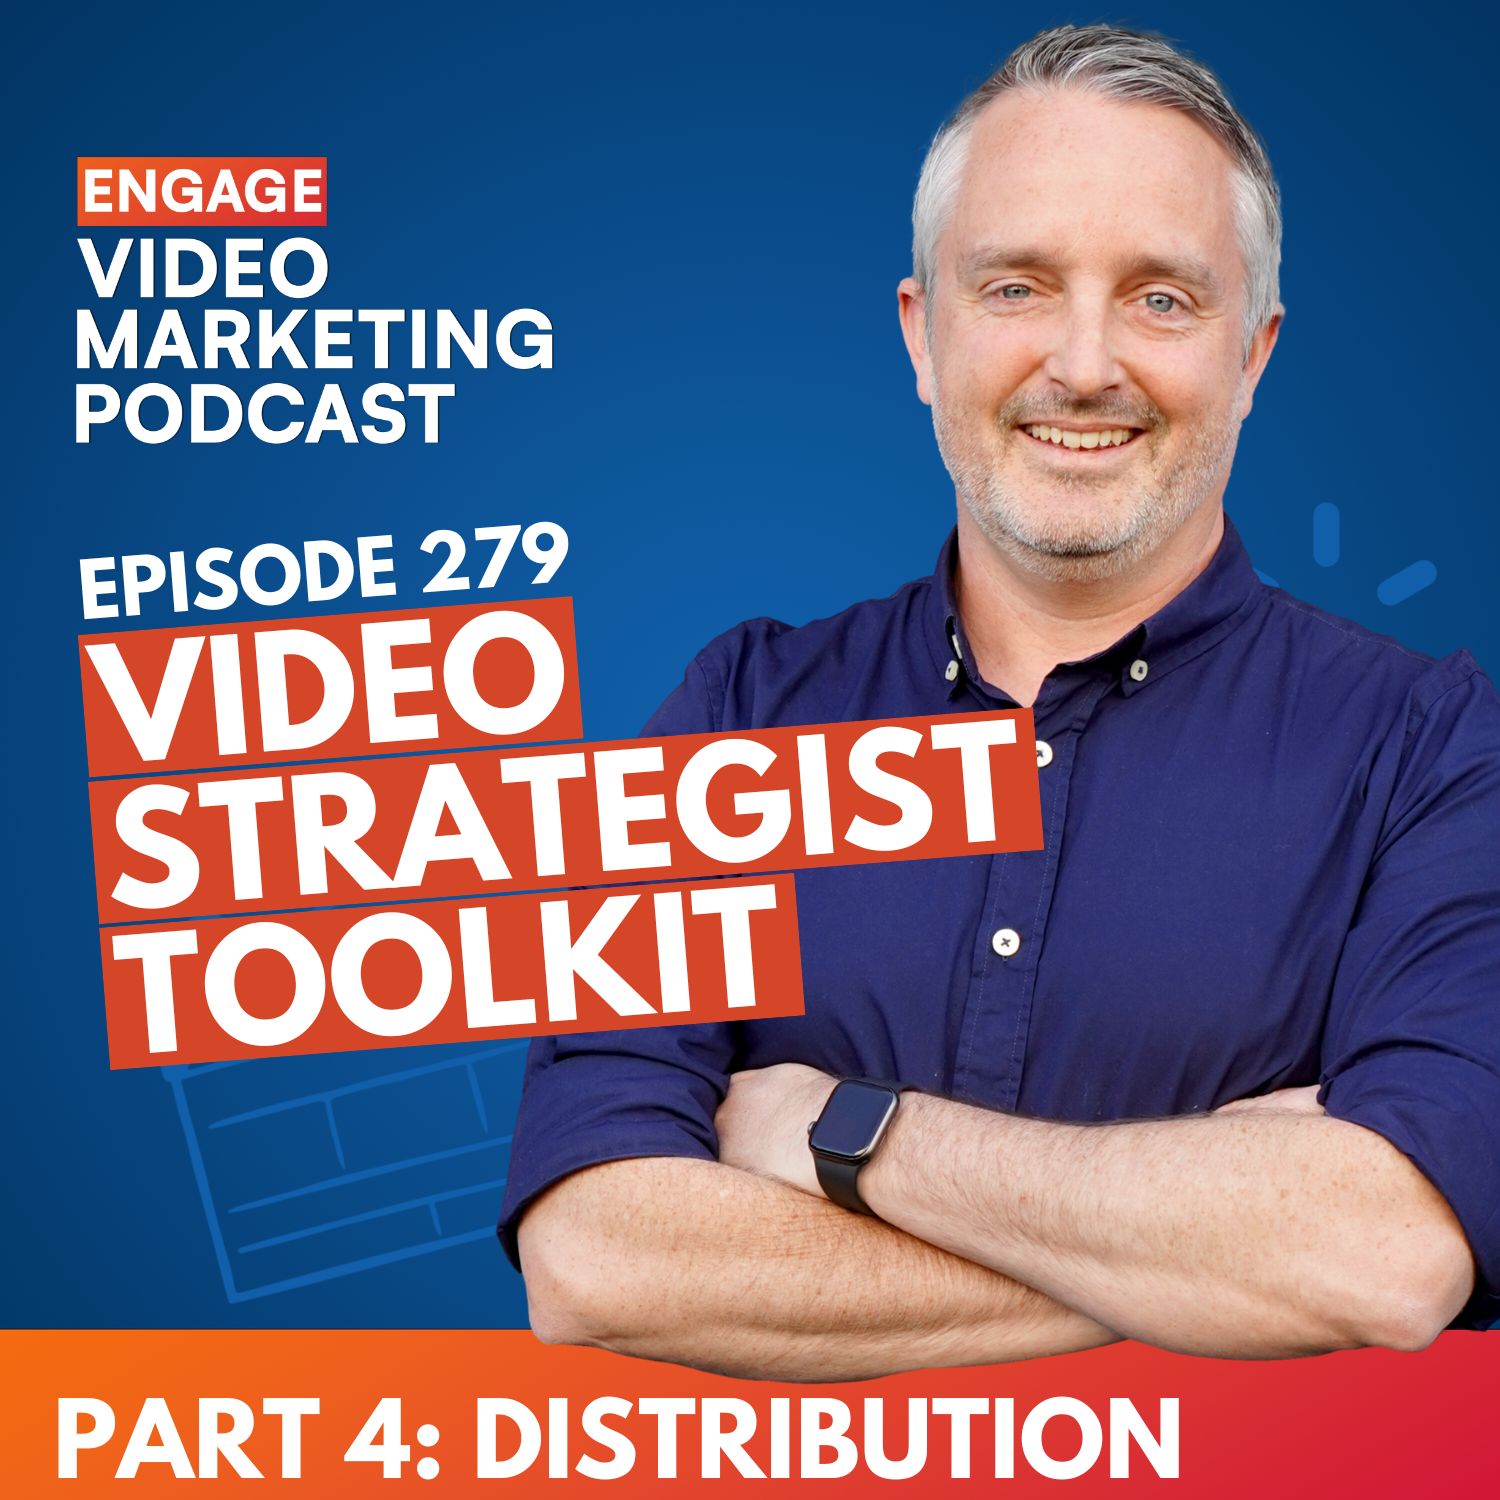 Video Strategist Toolkit Part 4: Distribution